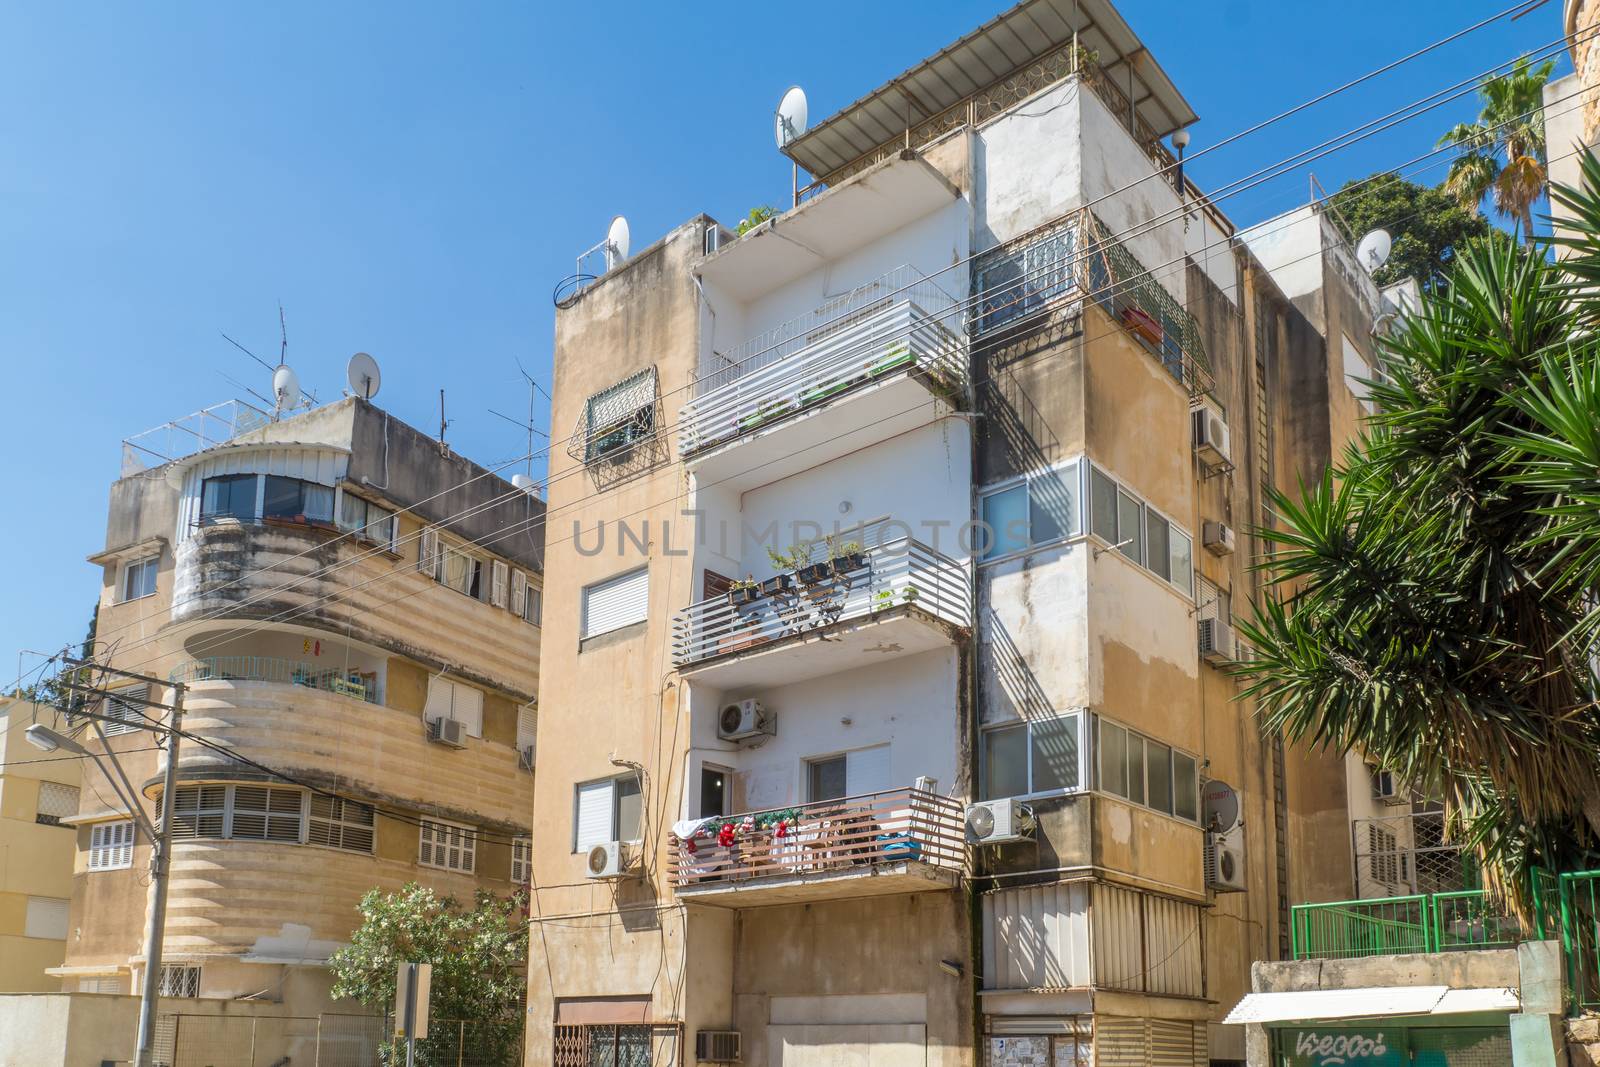 HAIFA, ISRAEL - JUNE 09, 2018: Buildings with a mixture of international (Bauhaus) and Arabic styles, in Hadar HaCarmel neighborhood, Haifa, Israel